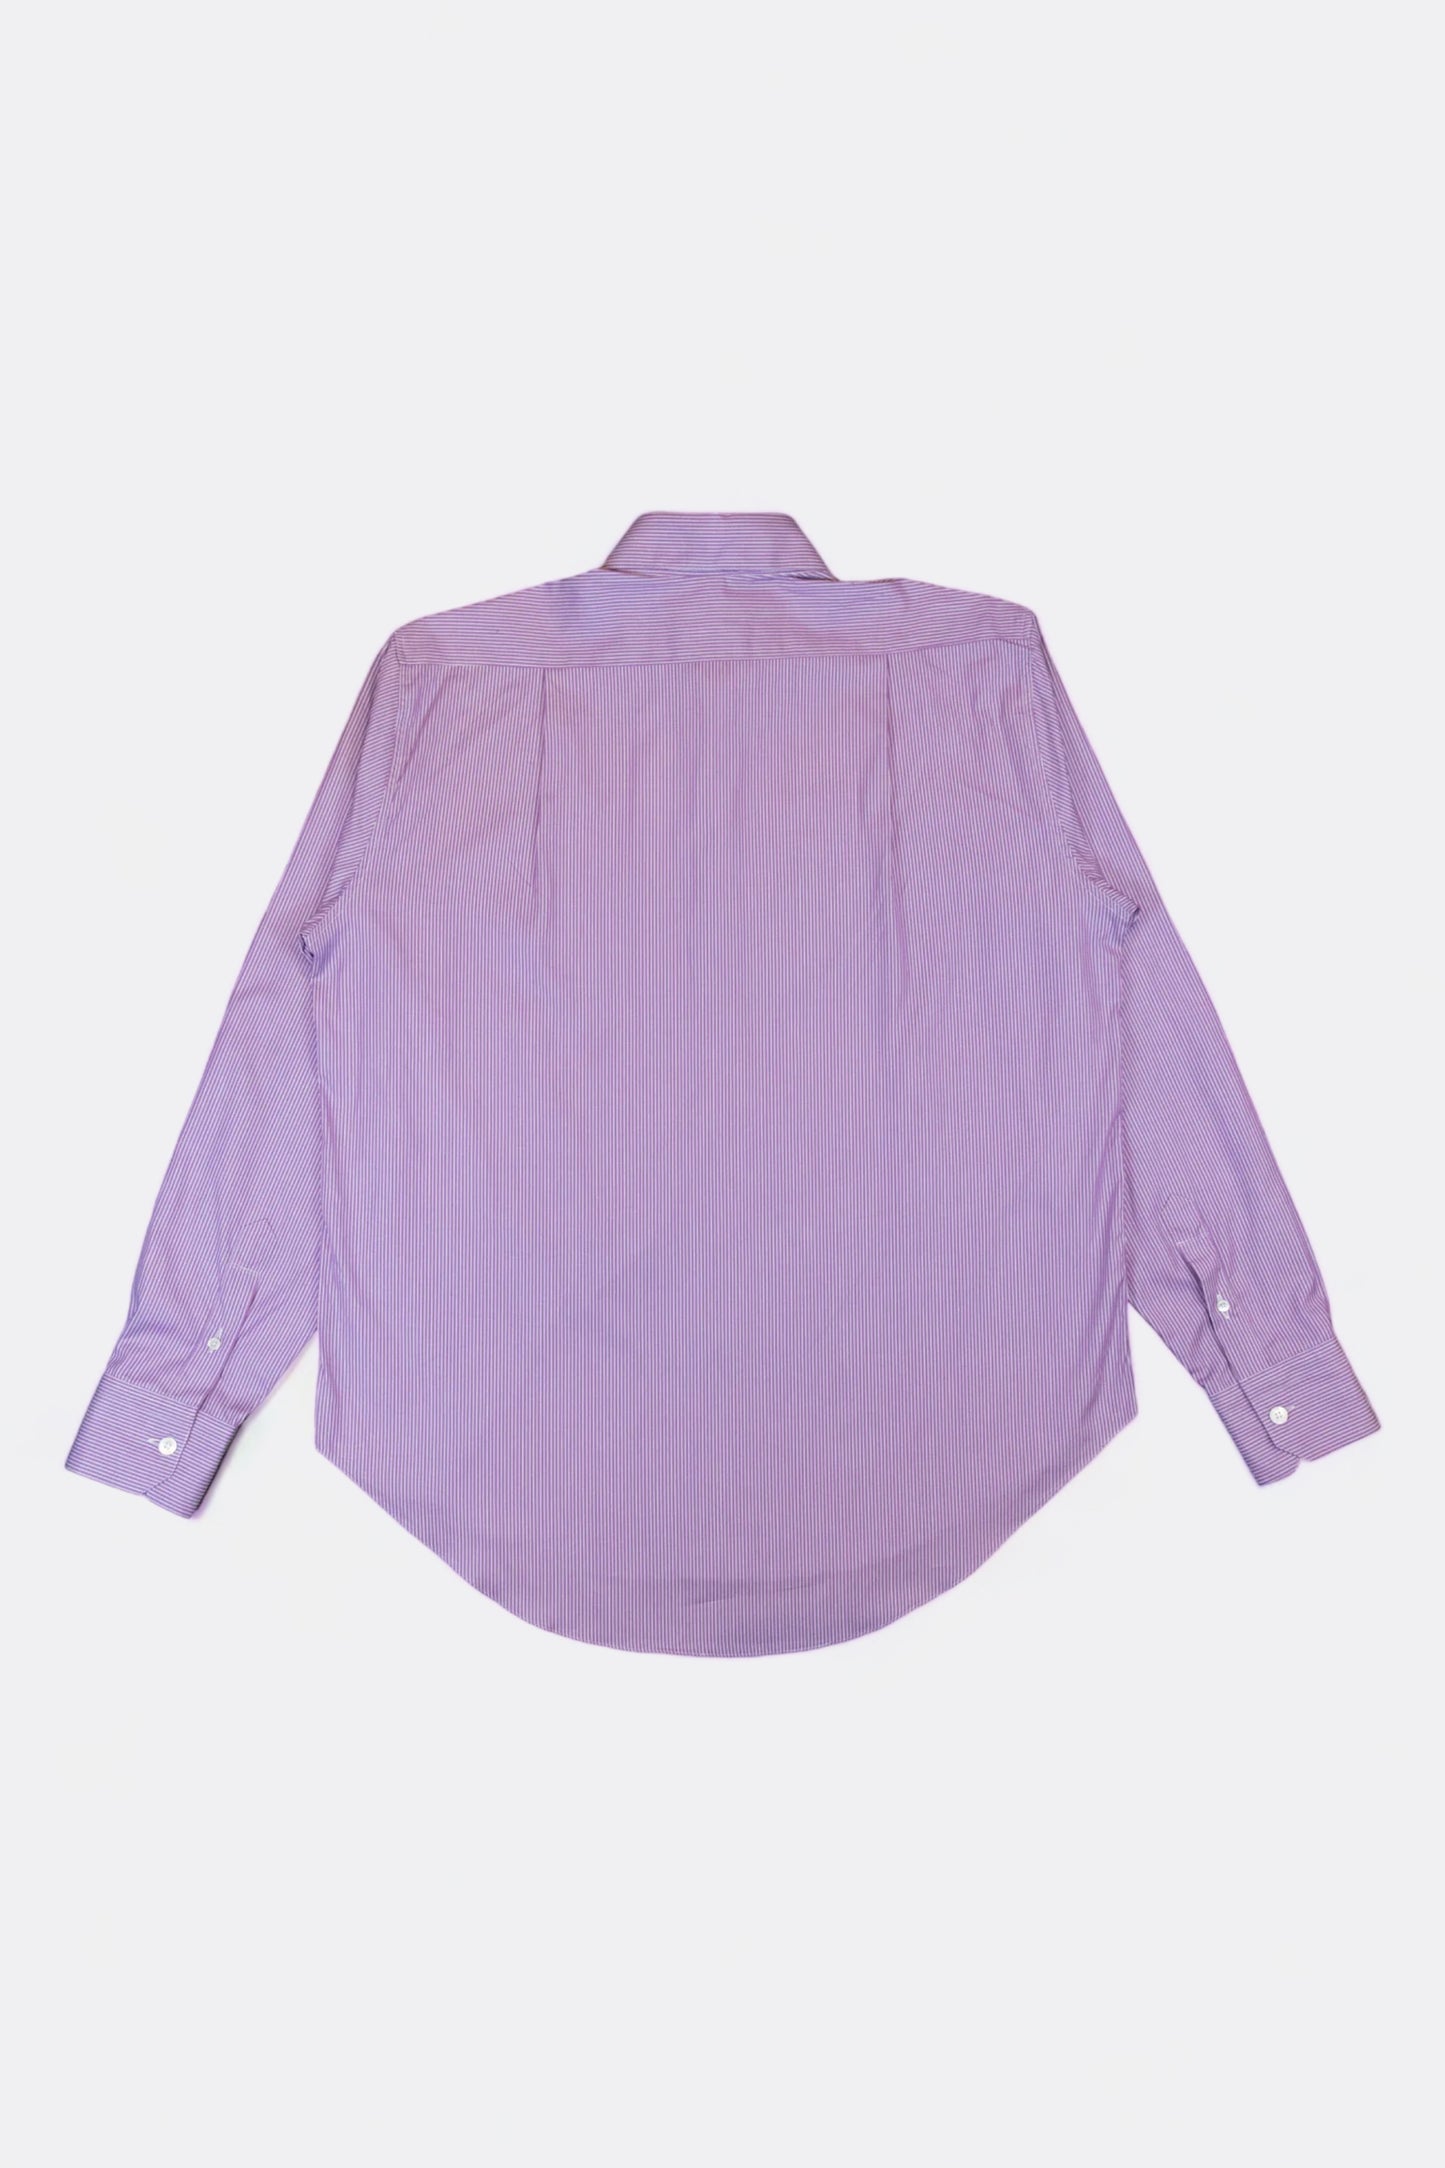 Camisas Manolo - Normal Shirt (Purple Stripes) 